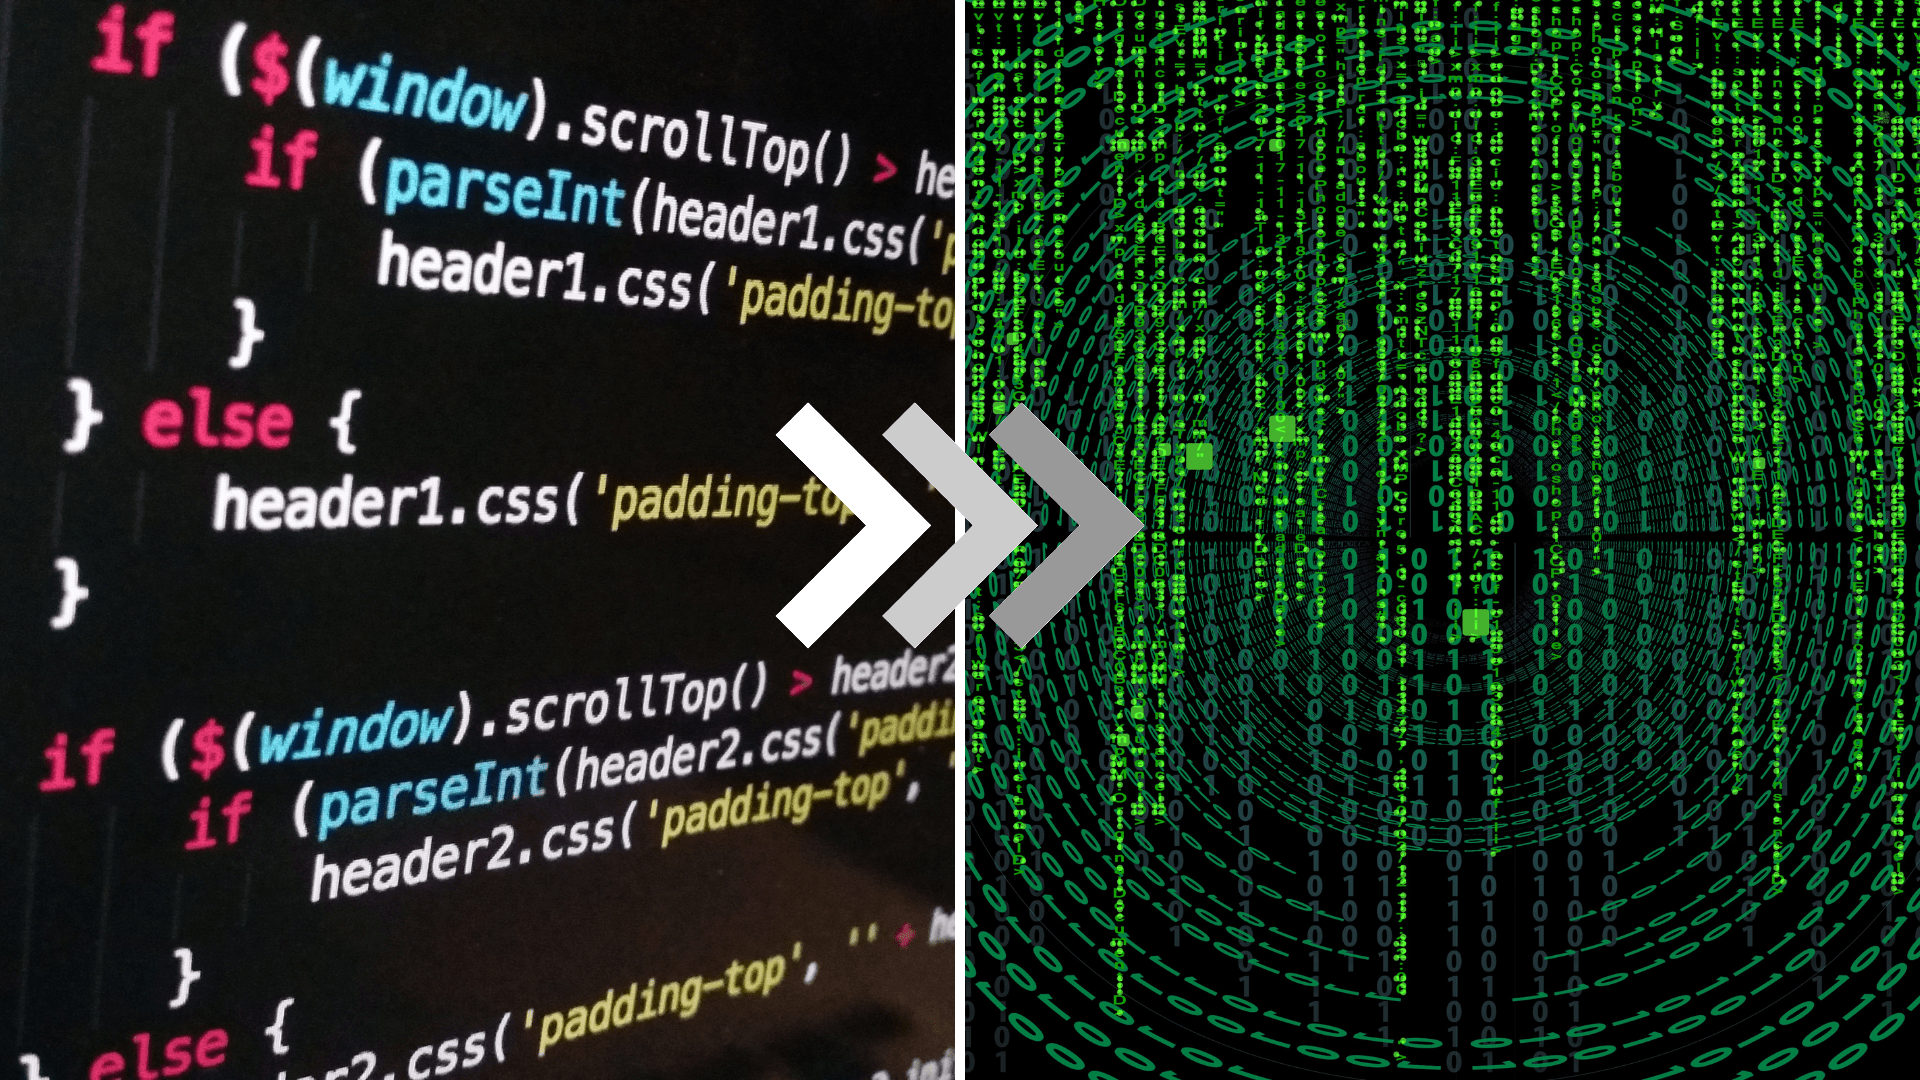 .NET Framework: From Source Code to Machine Code